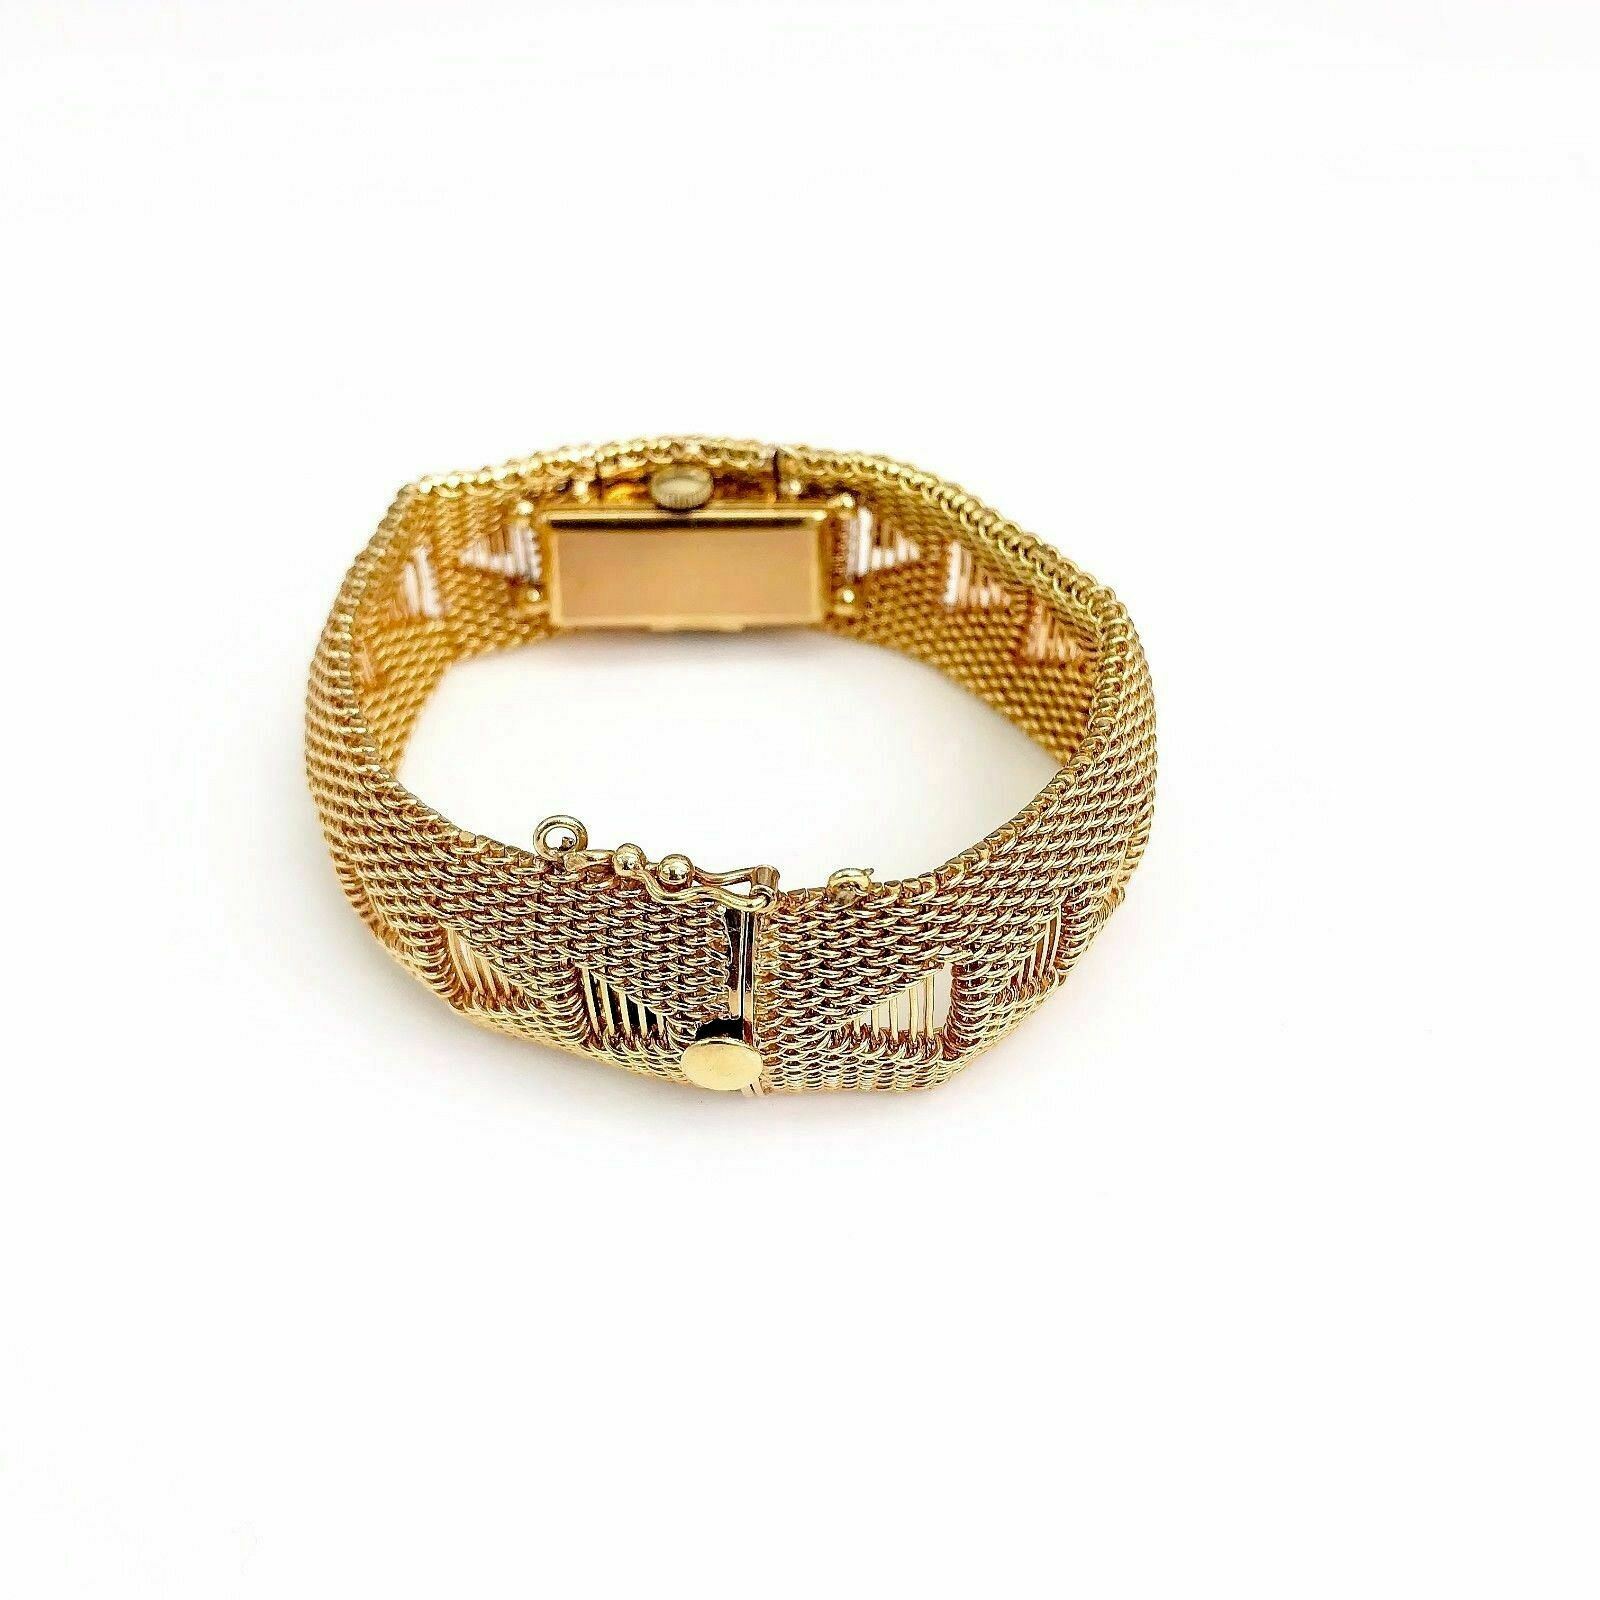 Vintage Solid 0.80 Carats 14K Rose Gold Diamond Bracelet Watch 1.85 Ounces